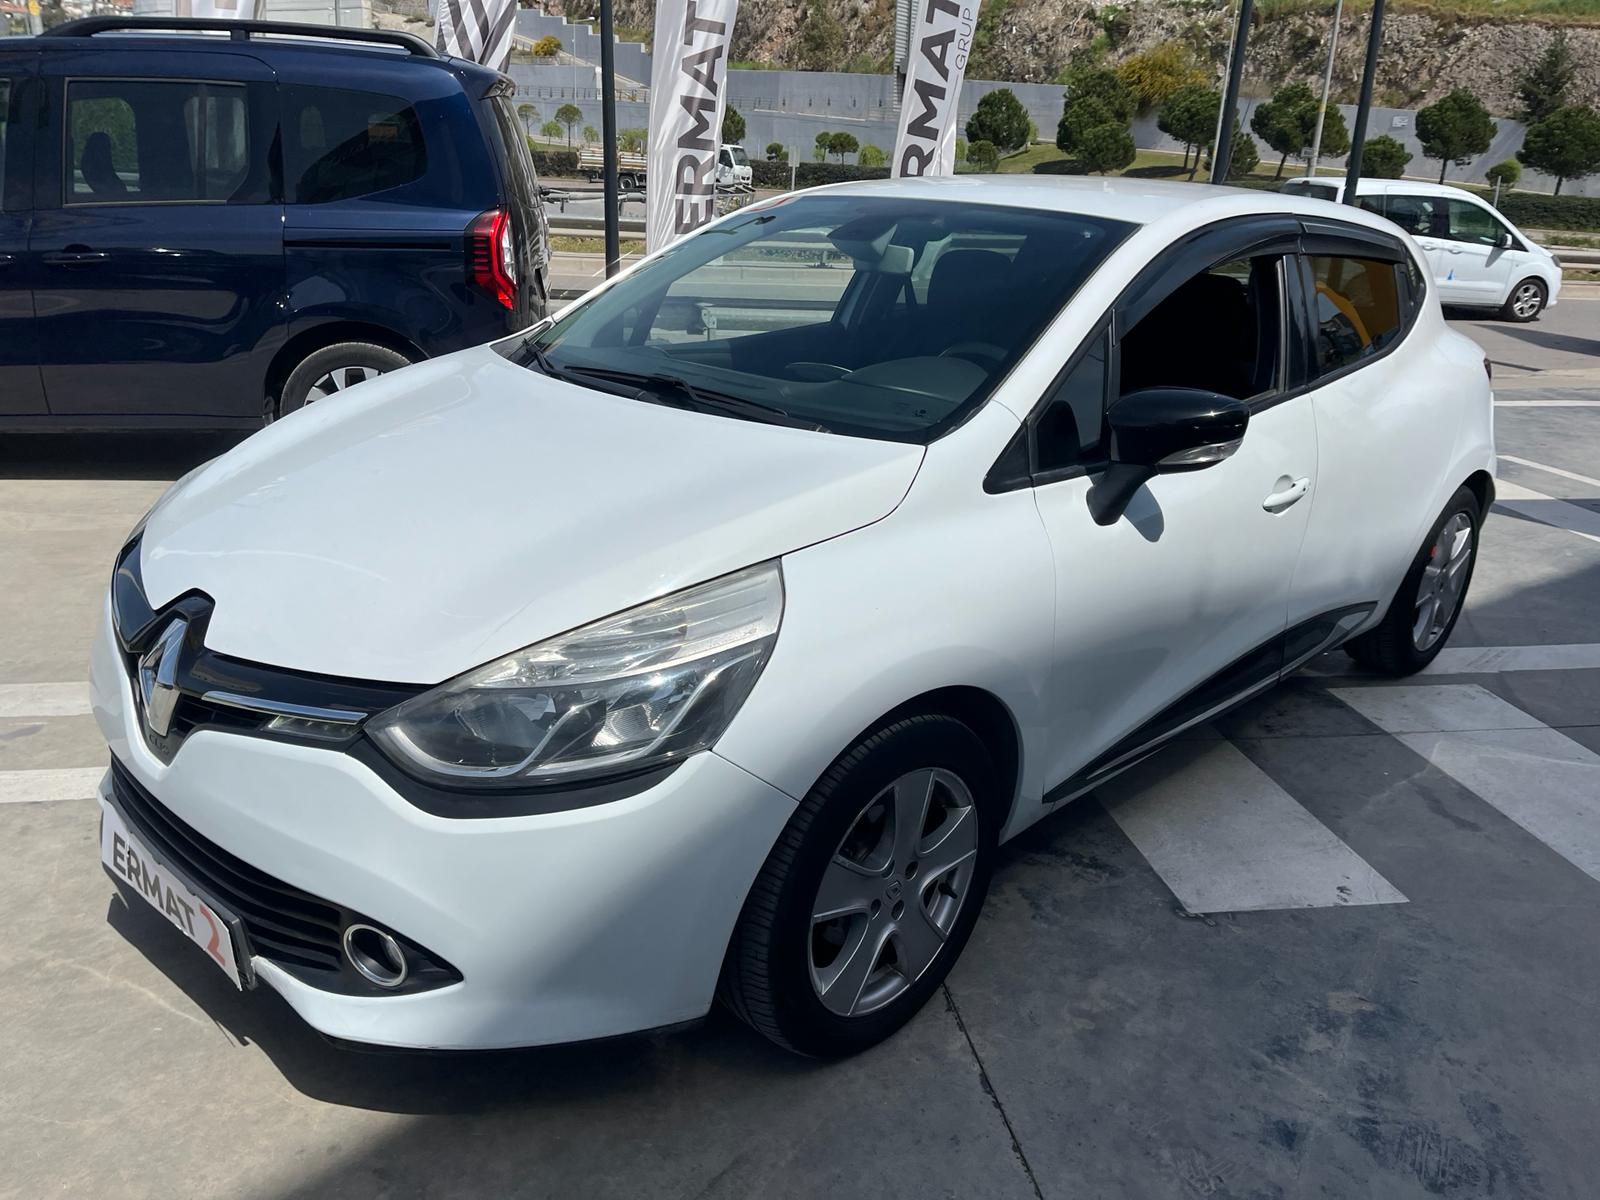 2015 Dizel Manuel Renault Clio Beyaz Ermat 2.El